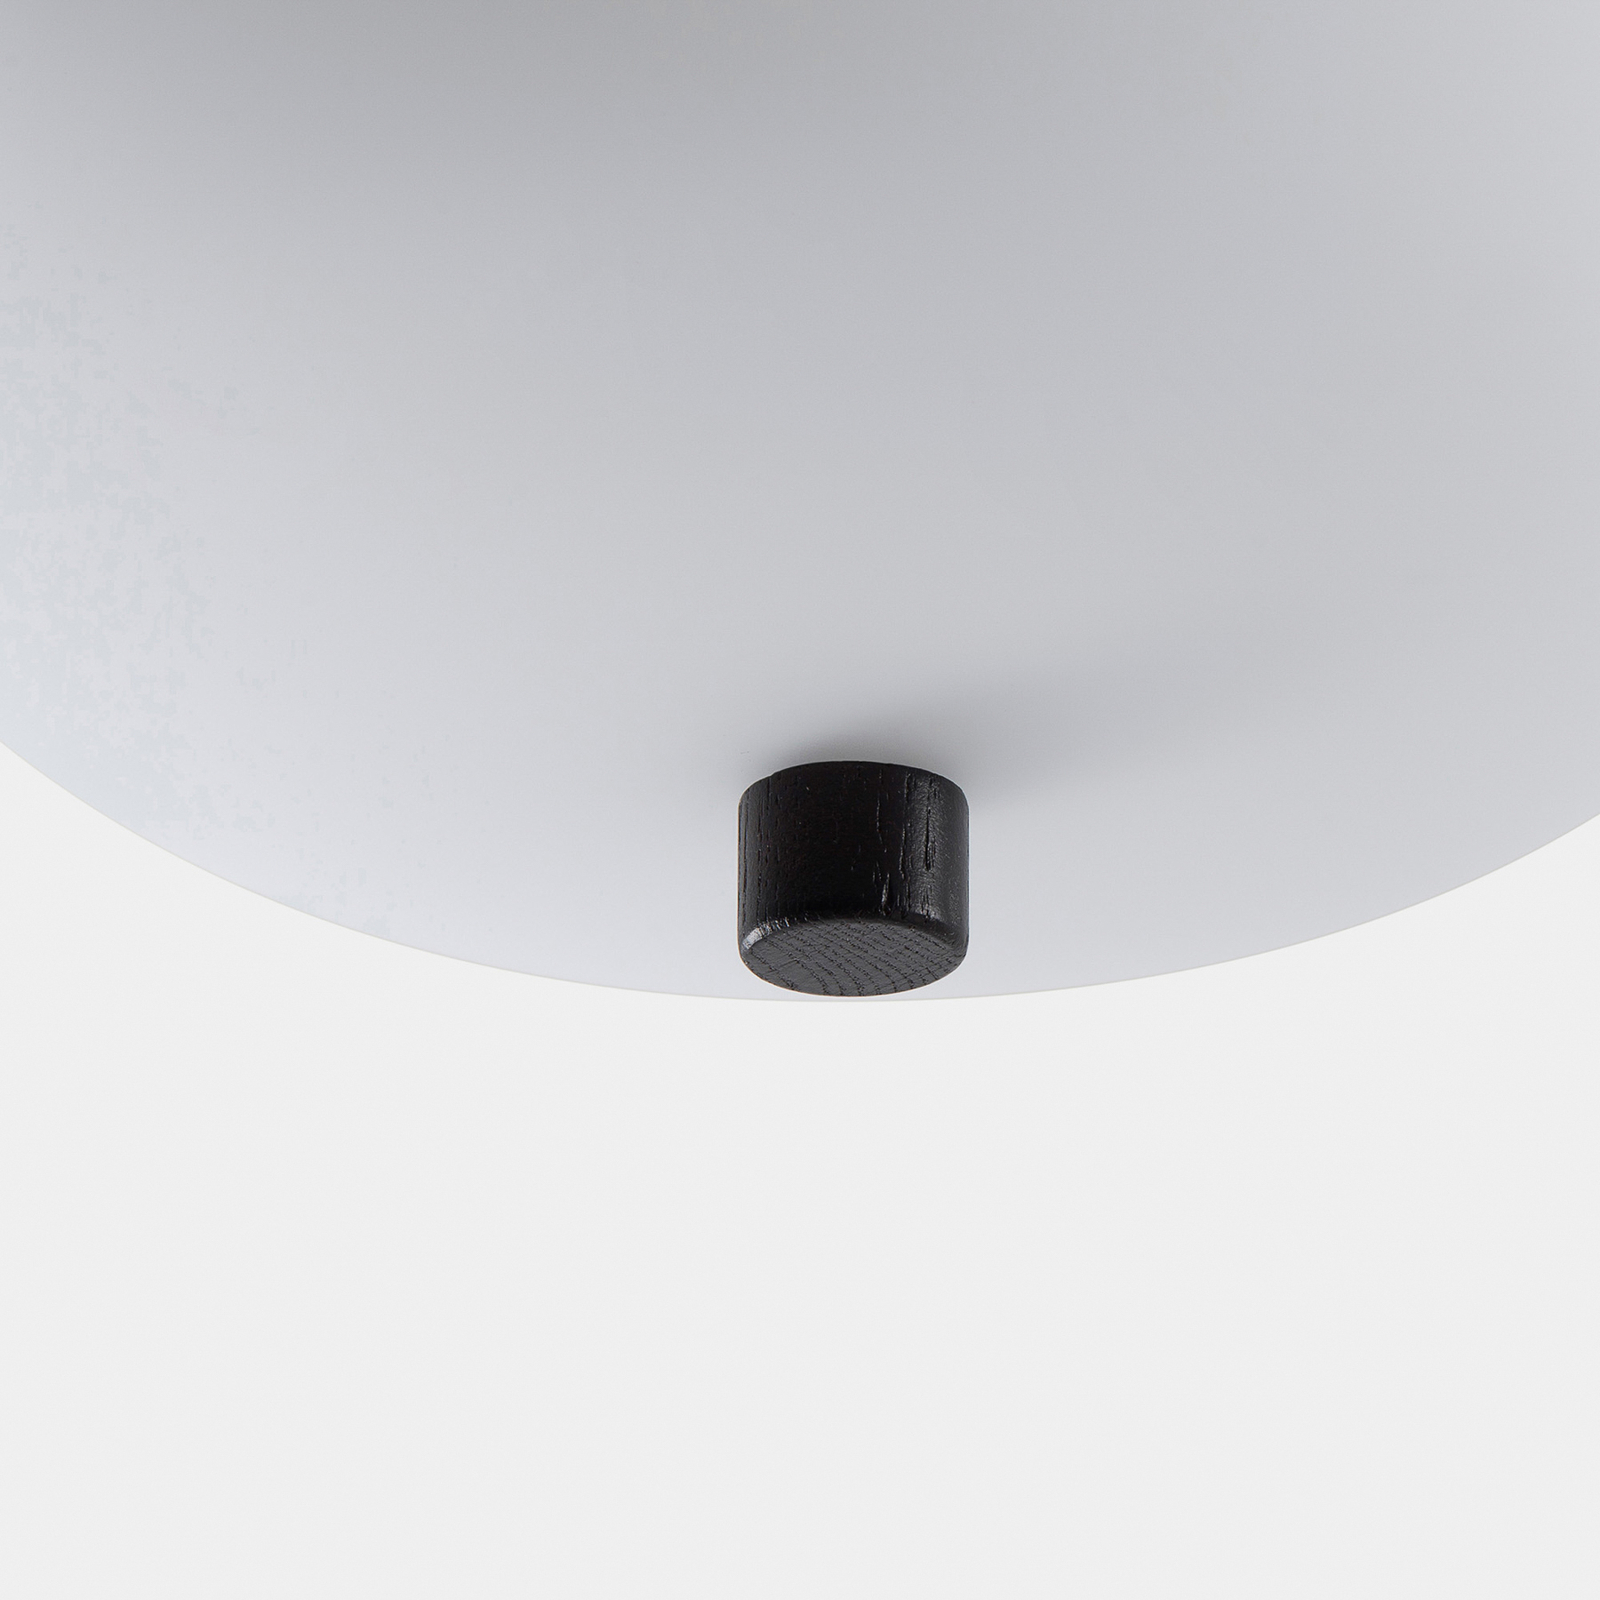 LEDS-C4 Ilargi LED-hänglampa fas mörk Ø 24 cm